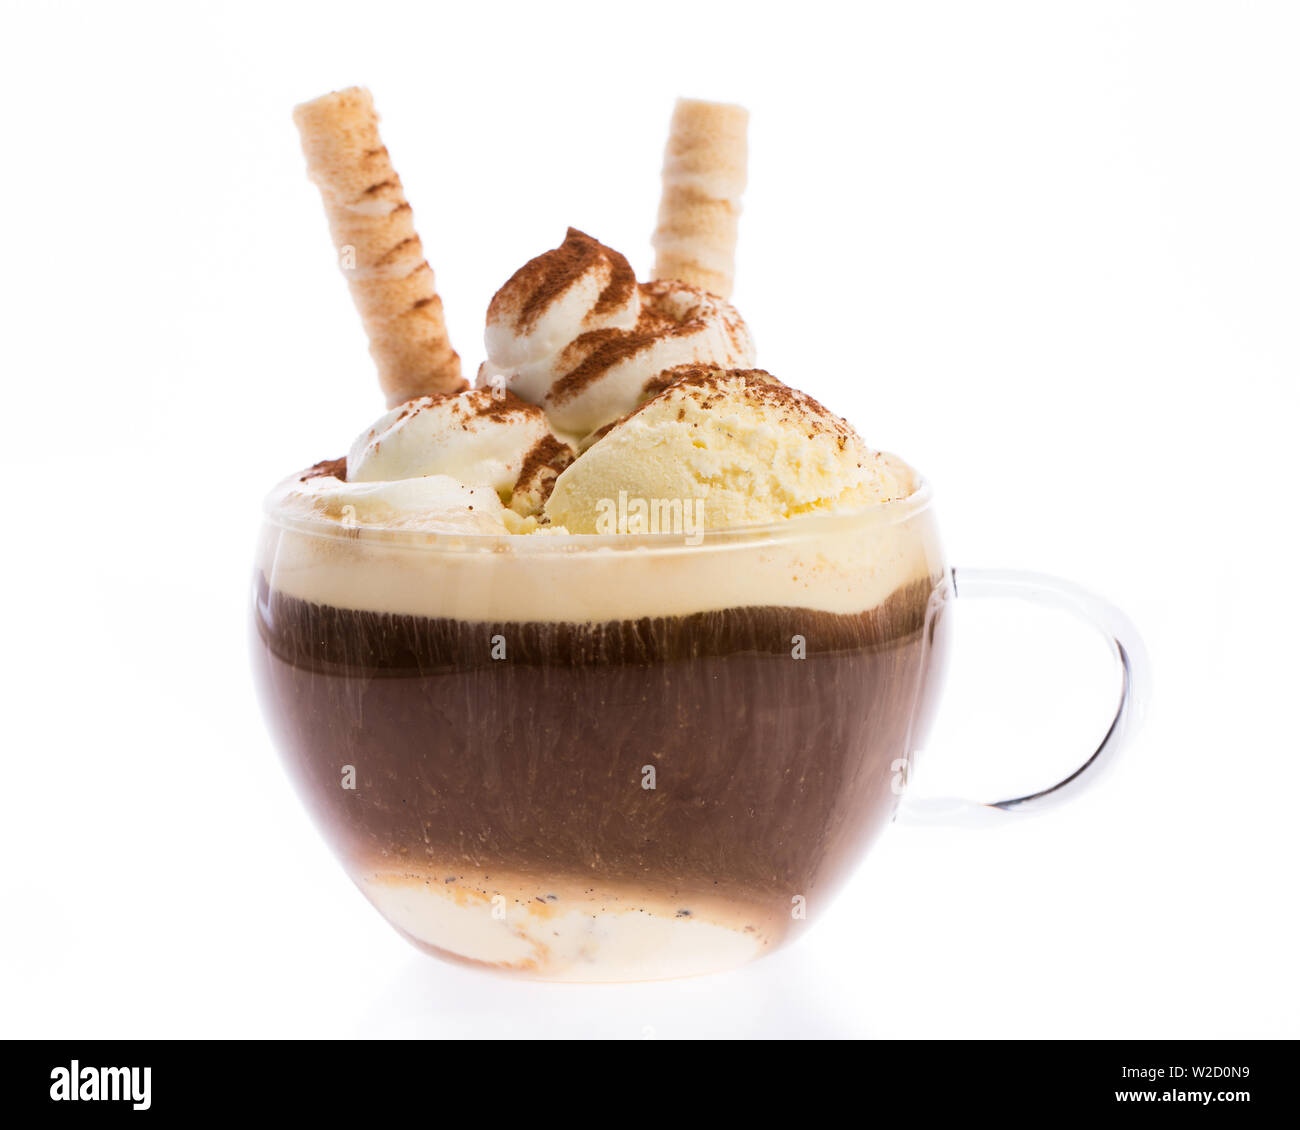 ice cream sundae: Vanilla ice cream and espresso - iced coffee in cup Stock Photo